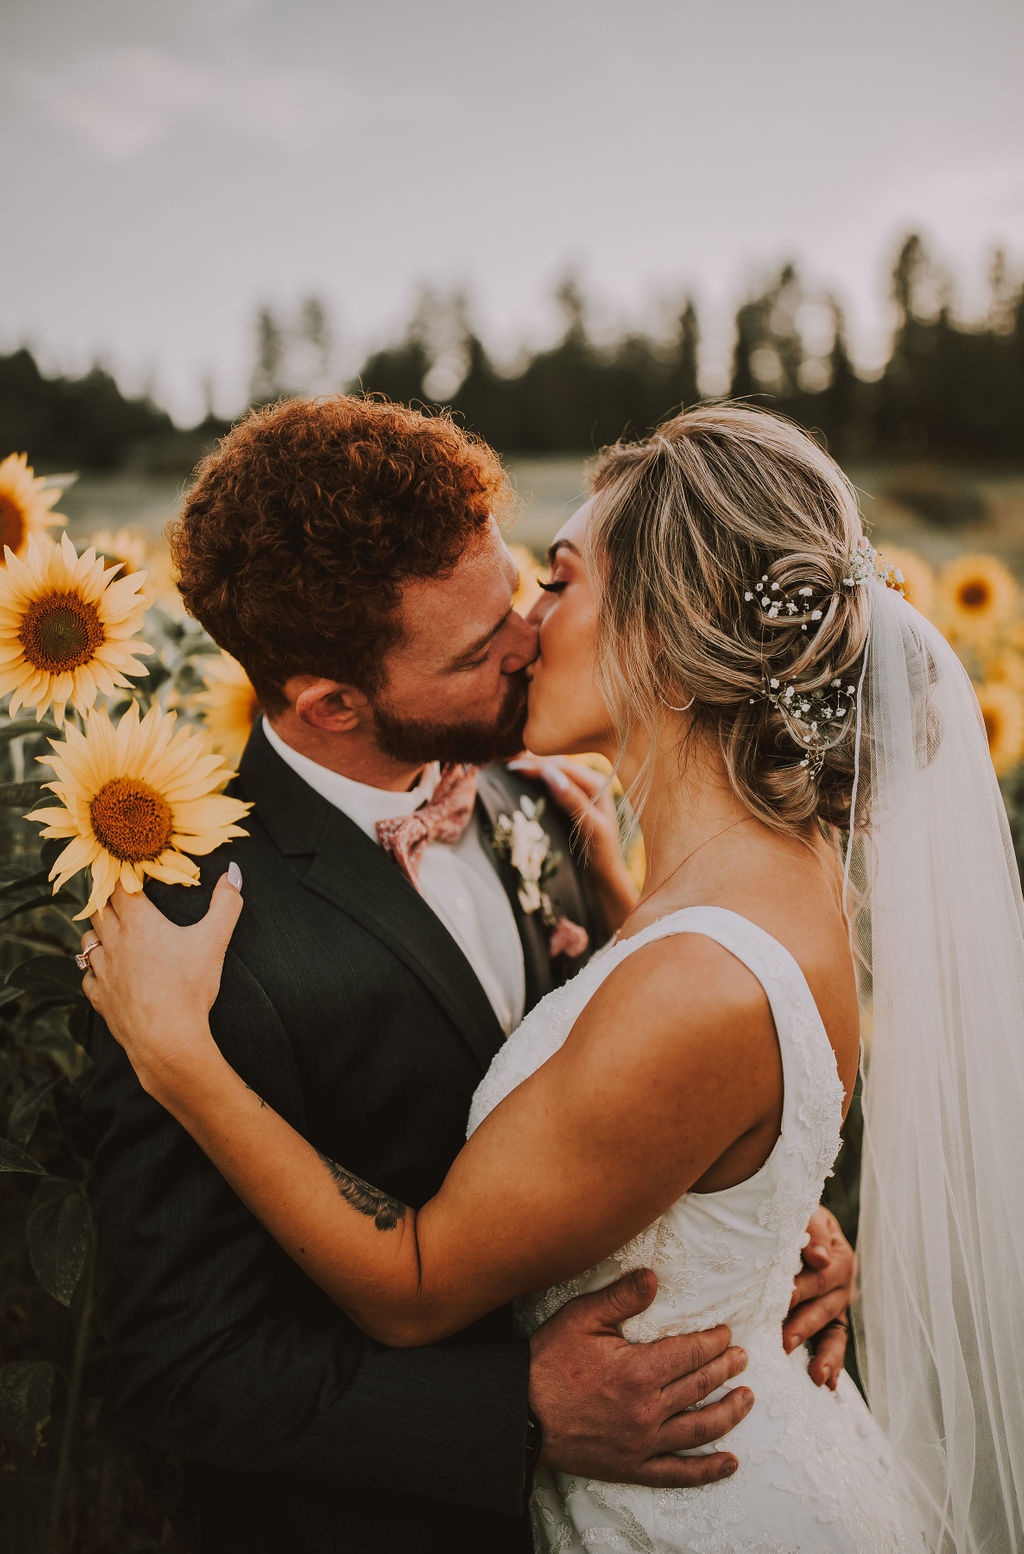 Spokane Washington Wedding Photos with a Kiss in a Sunflower field